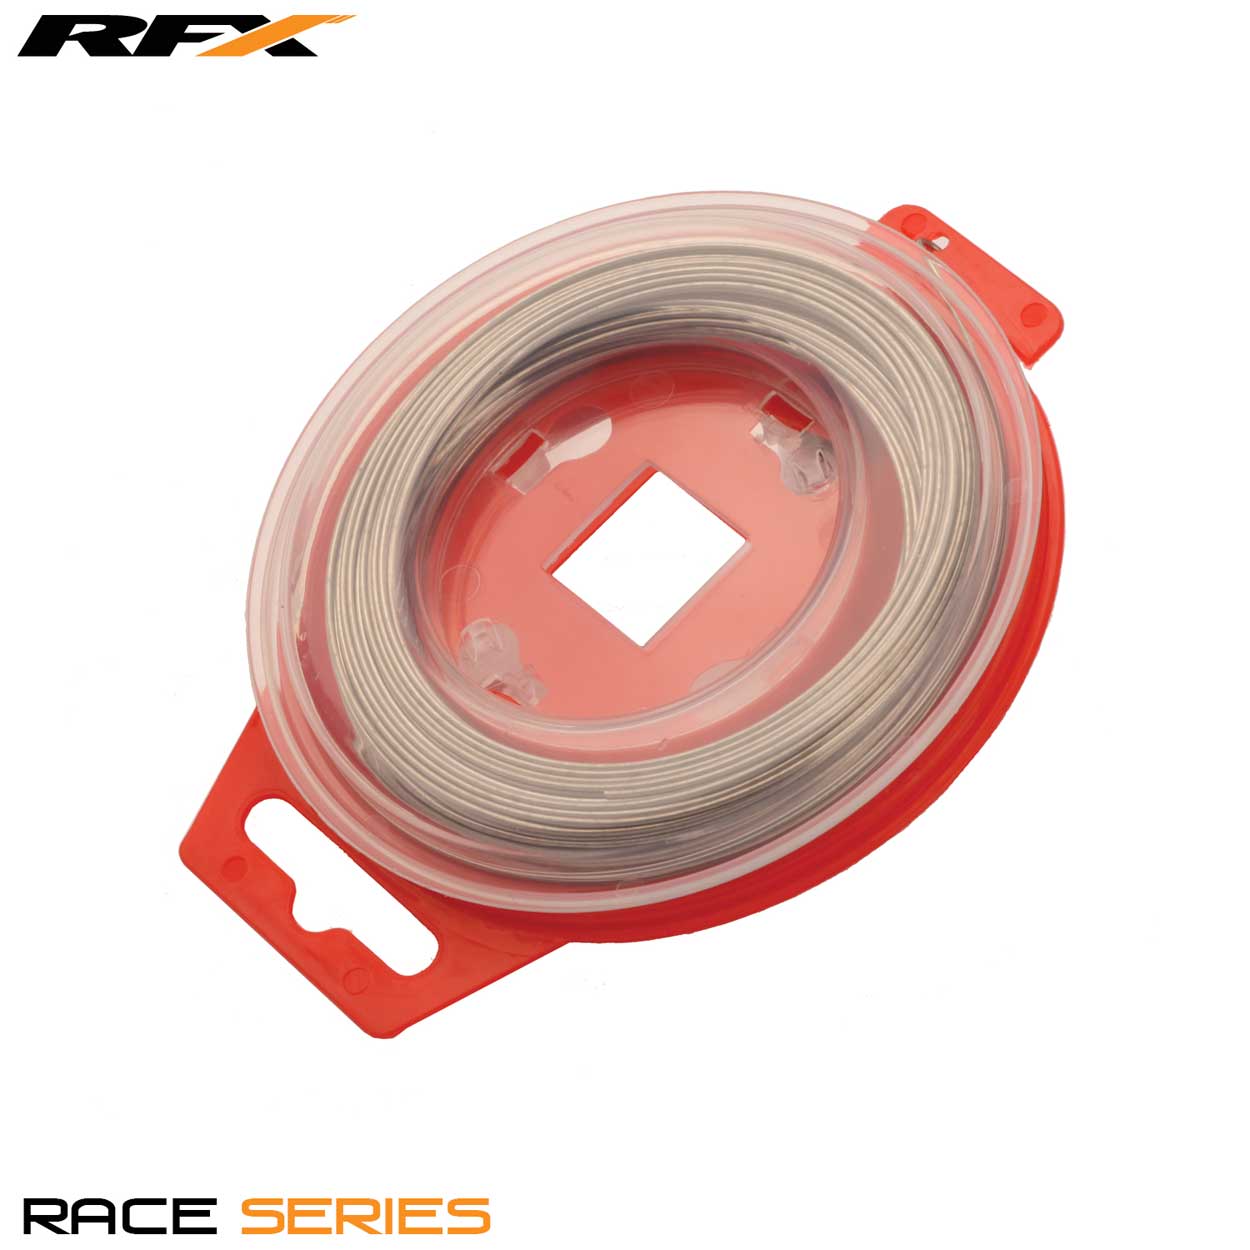 RFX Race Grip locking Safety Wire (Silver) Universal 0.8mm x 30m Roll - Silver - RFX